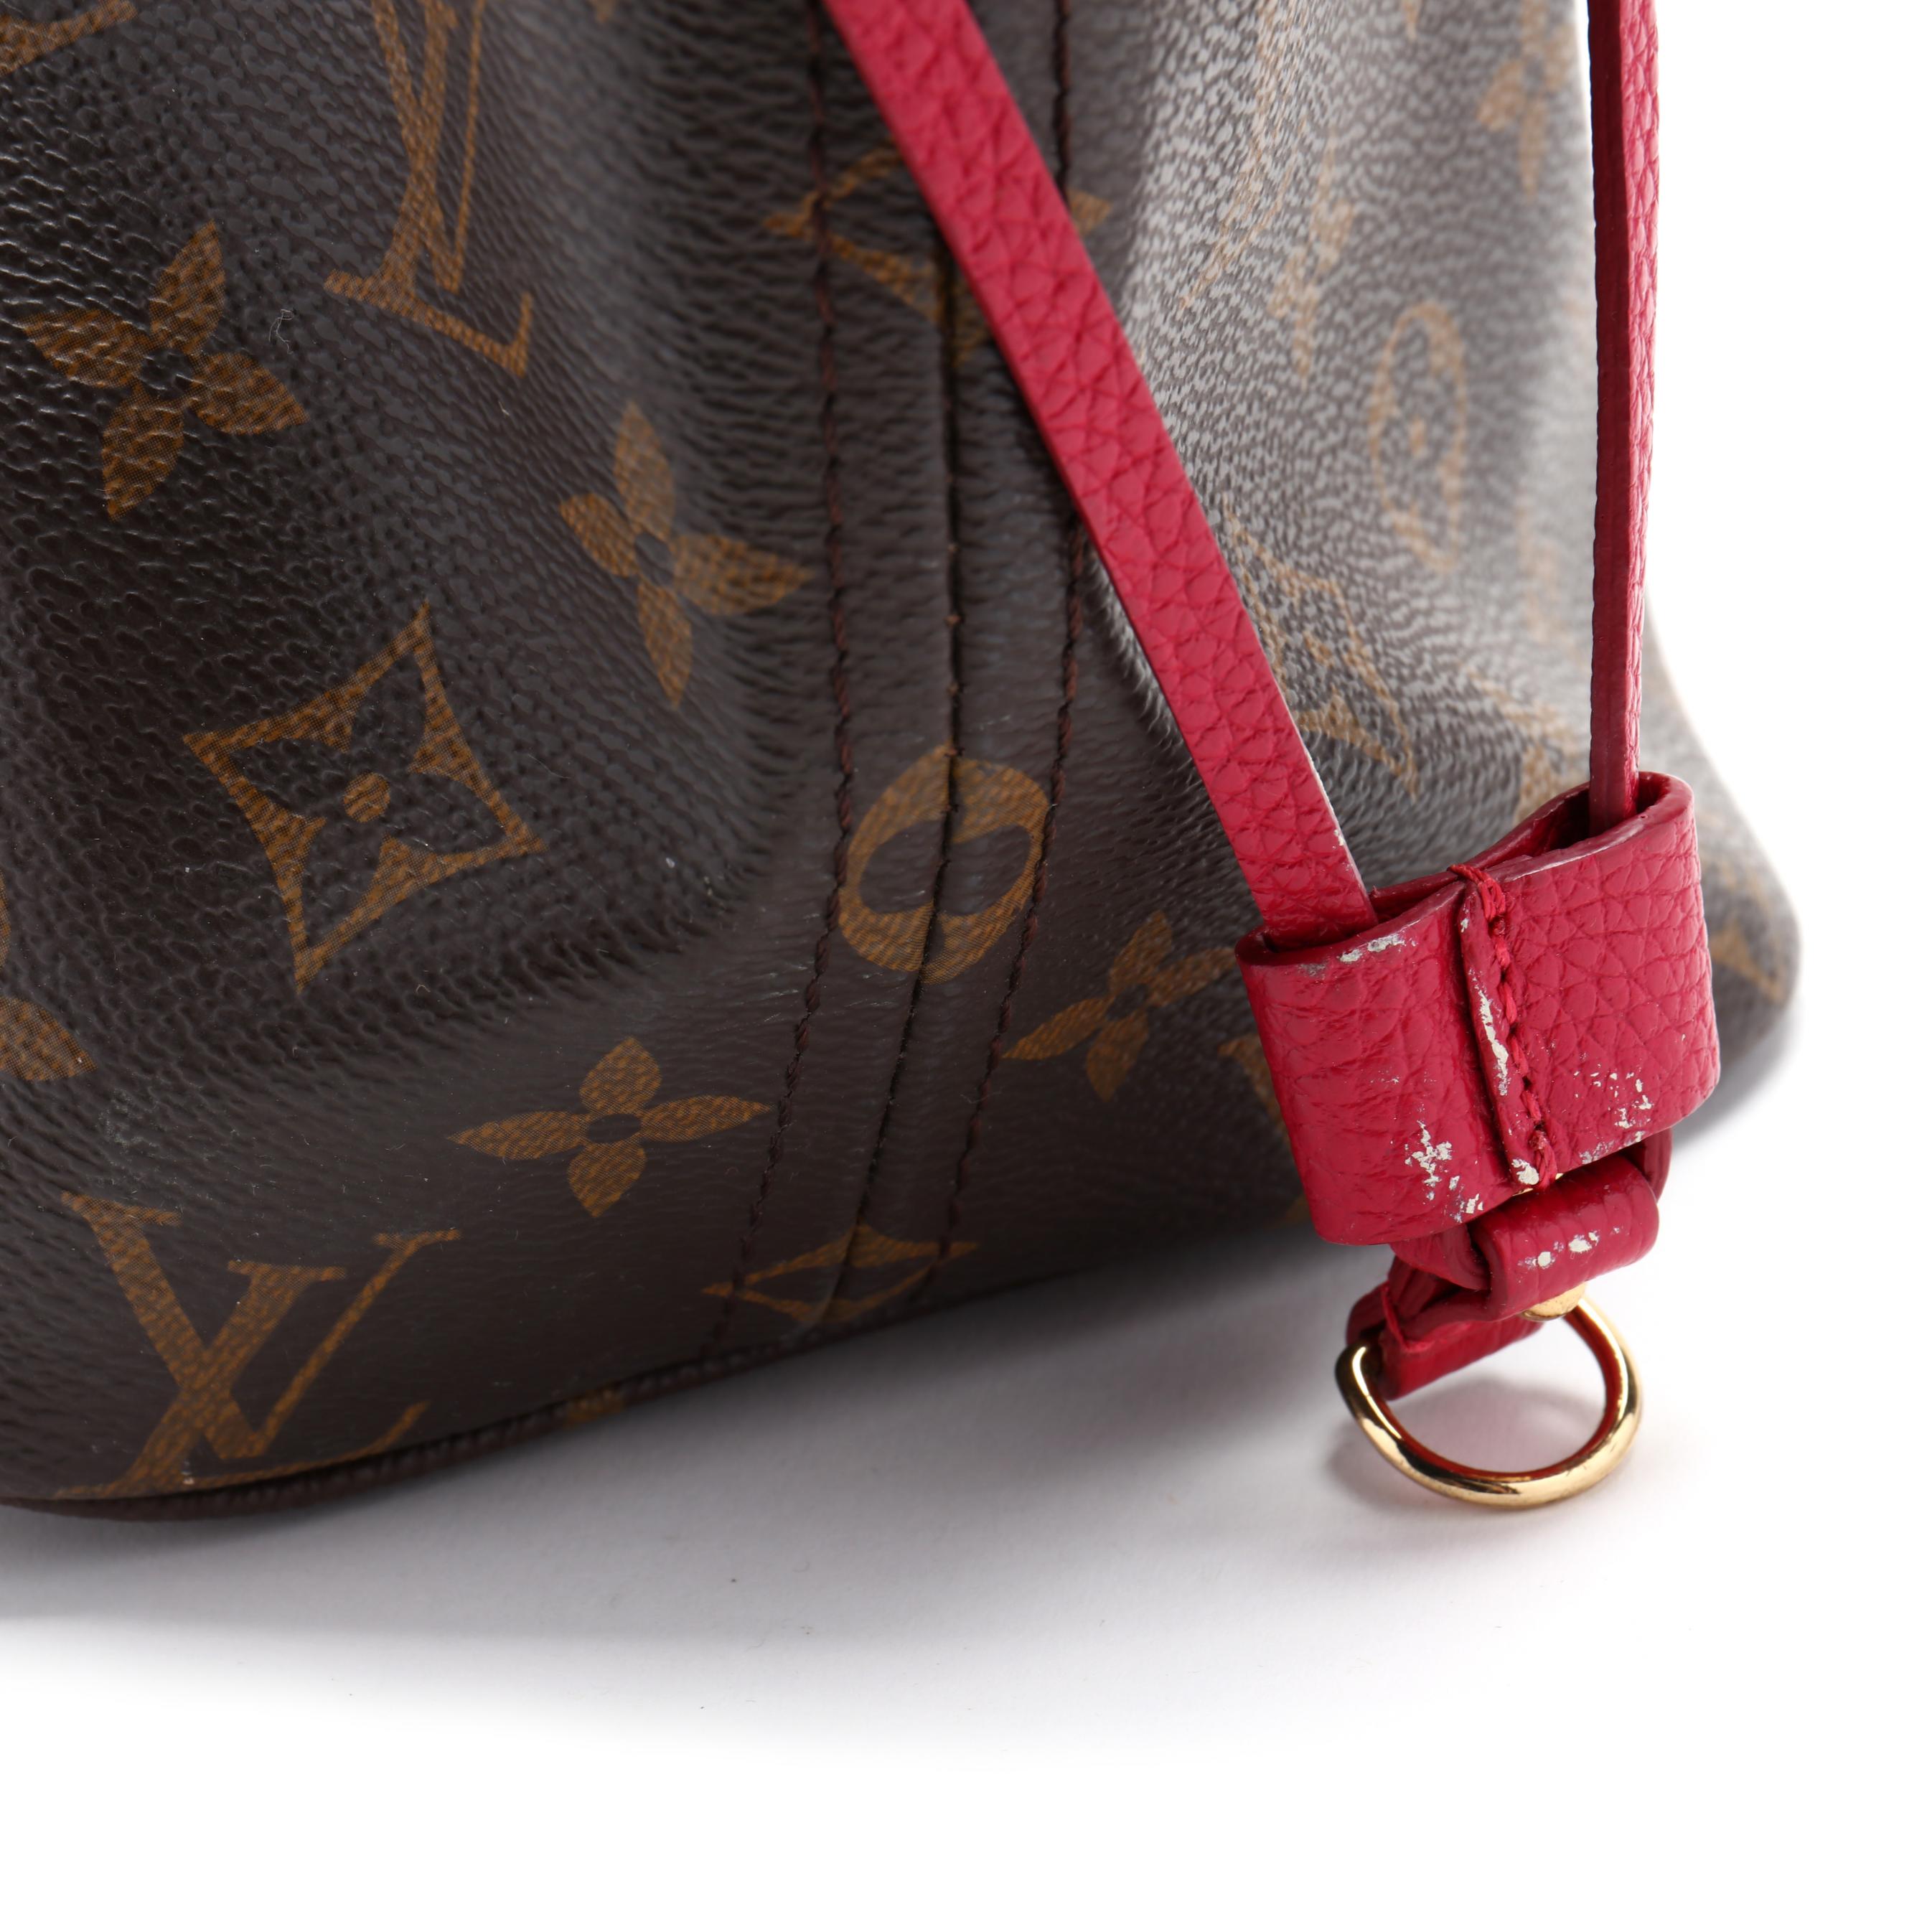 Louis Vuitton Indian Rose Monogram Ikat Floral Nylon Limited Edition  Noefull Bag Louis Vuitton | The Luxury Closet